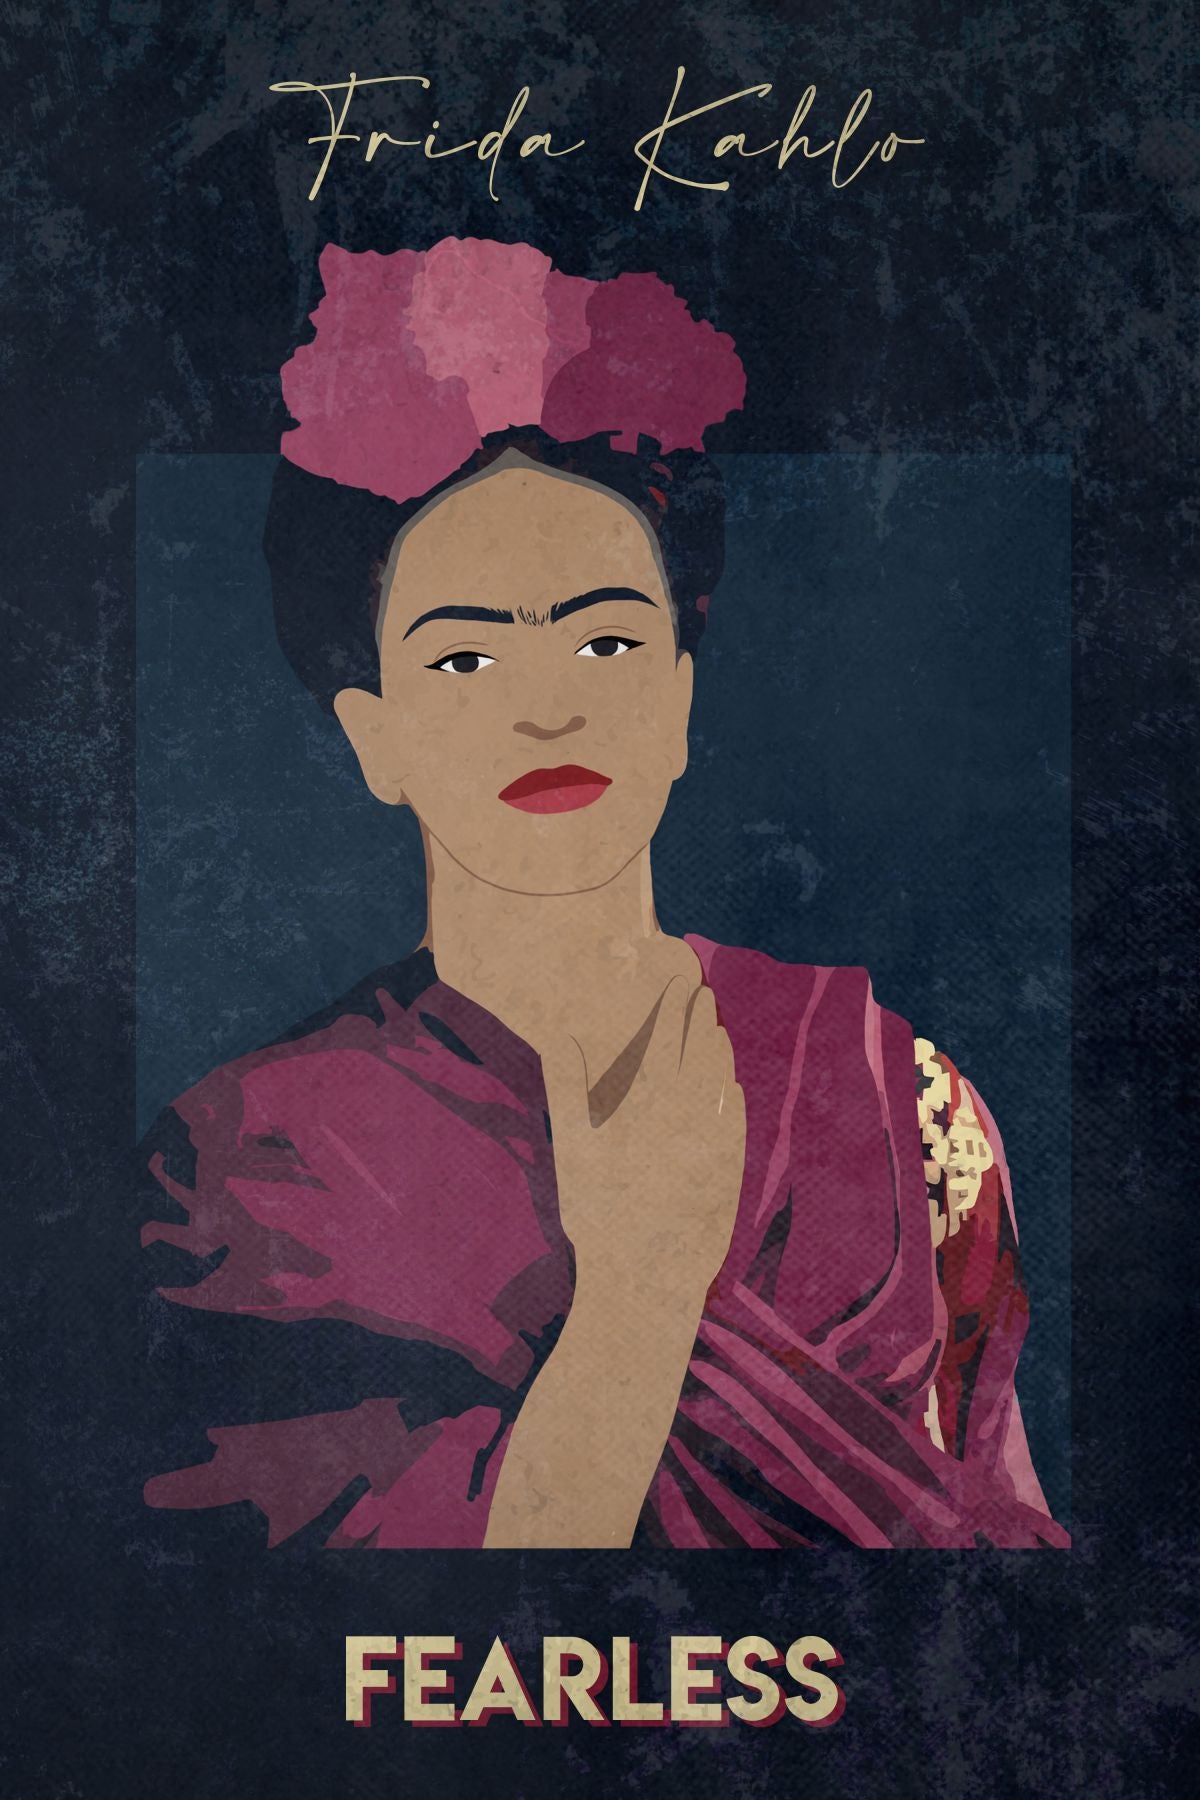 Frida Kahlo Fearless